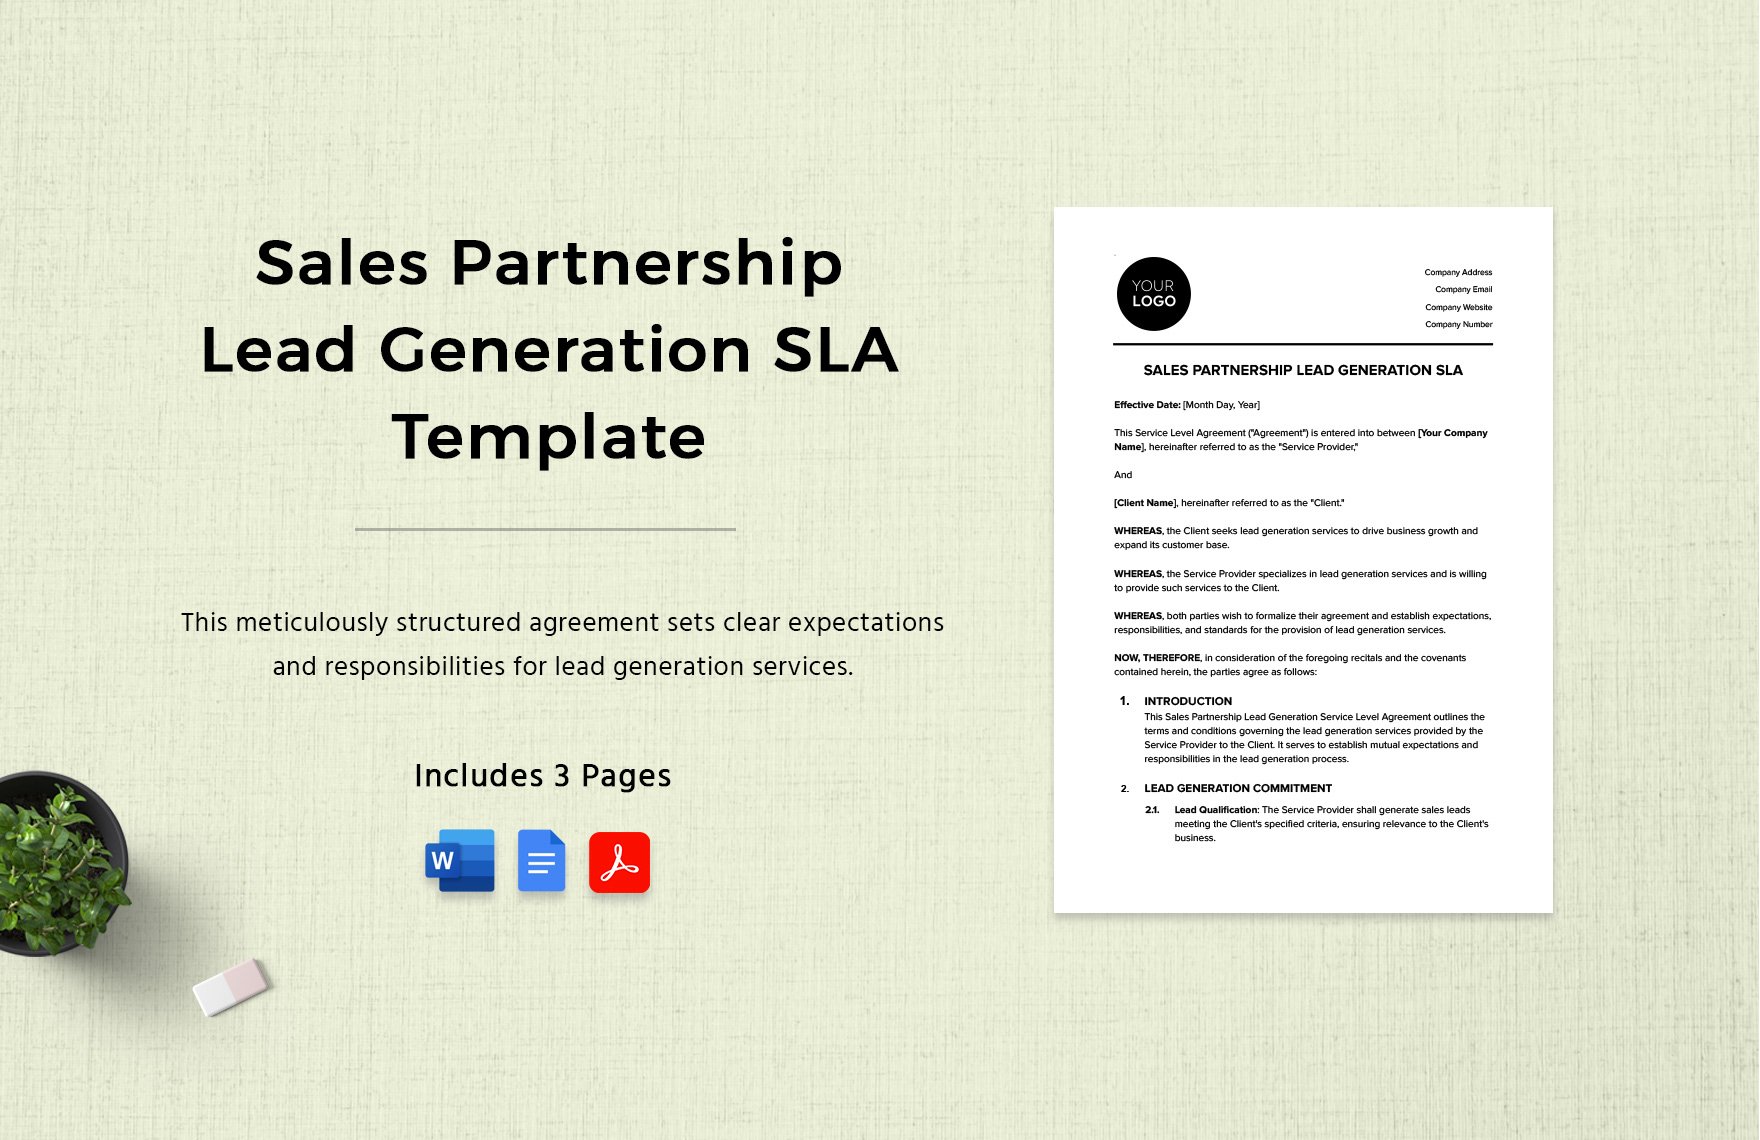 Sales Partnership Lead Generation SLA Template